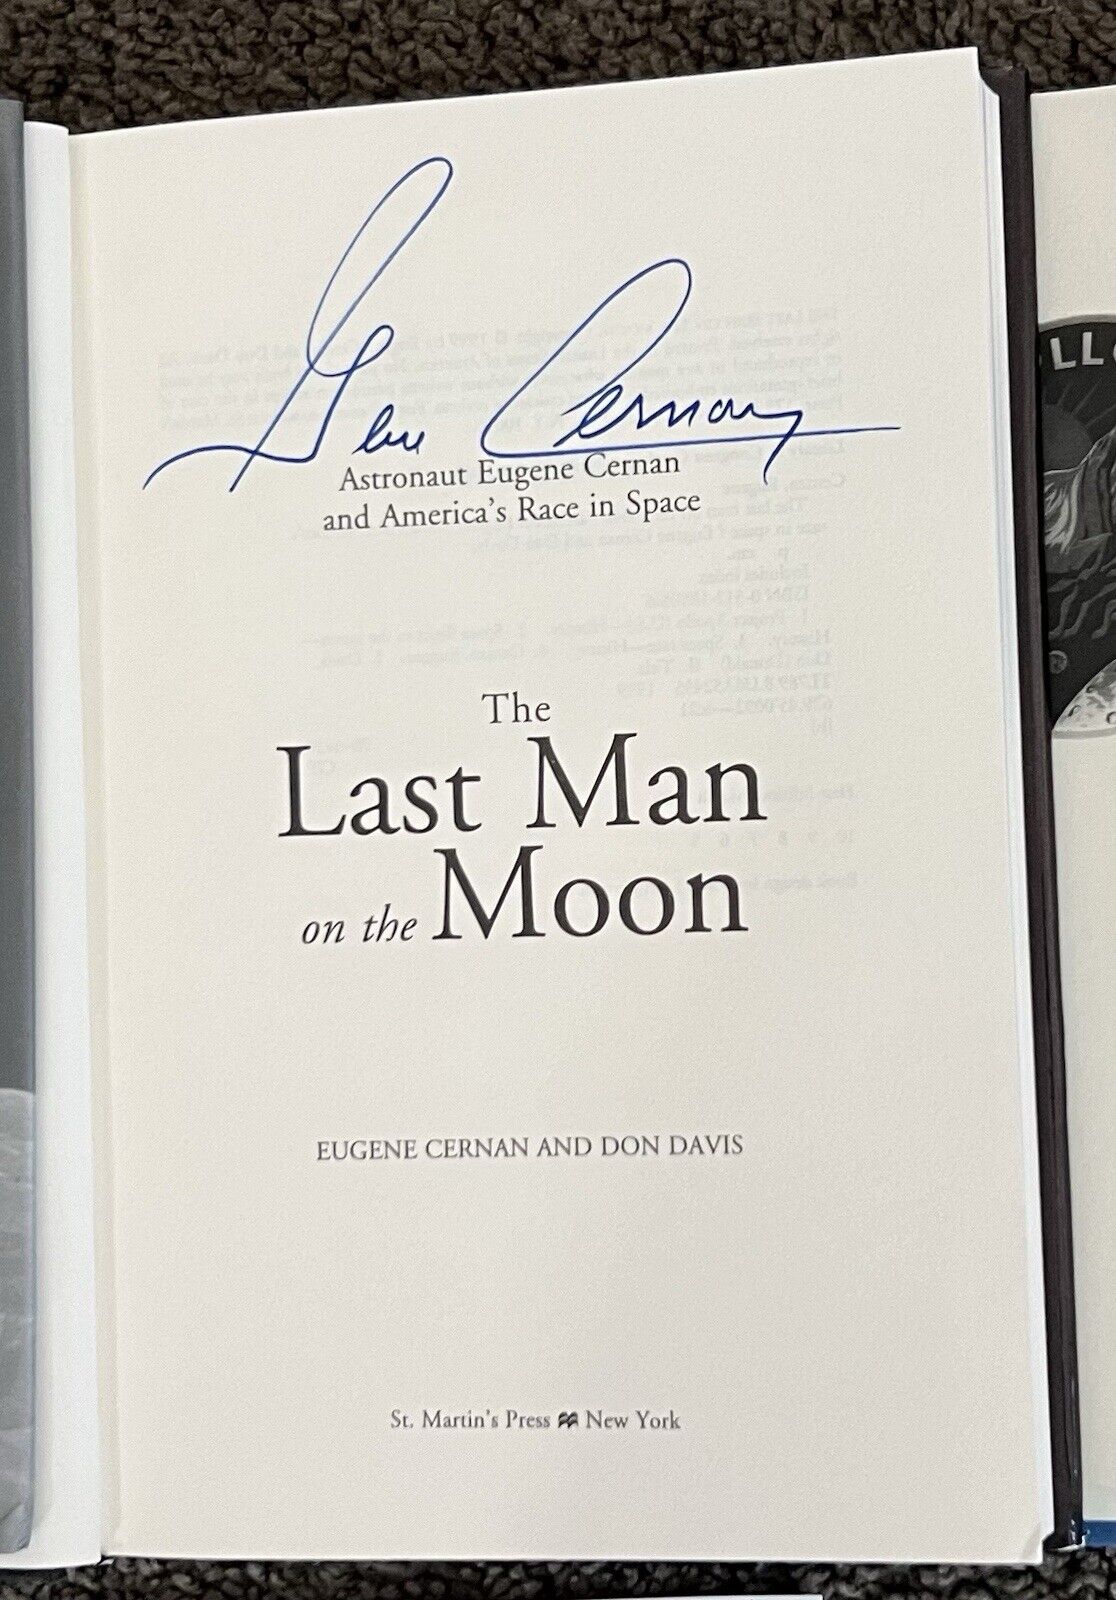 GENE CERNAN SIGNED The Last Man on the Moon (Moonwalker) Not Personalized 1st Ed